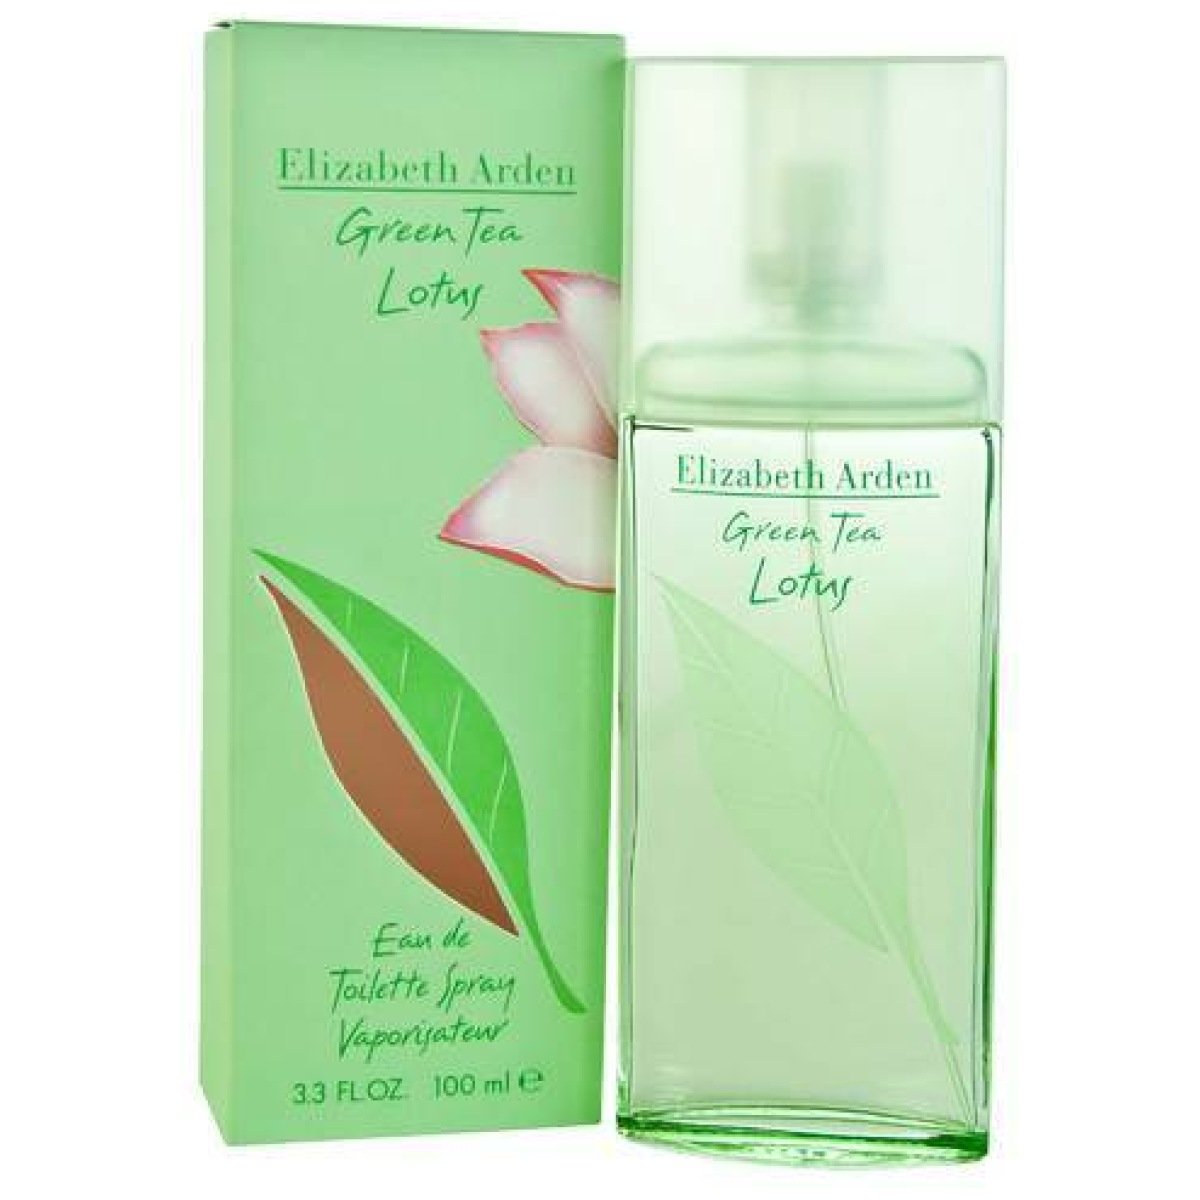 Elizabeth Arden Green Tea Lotus EDT Perfume For Women 100 ml